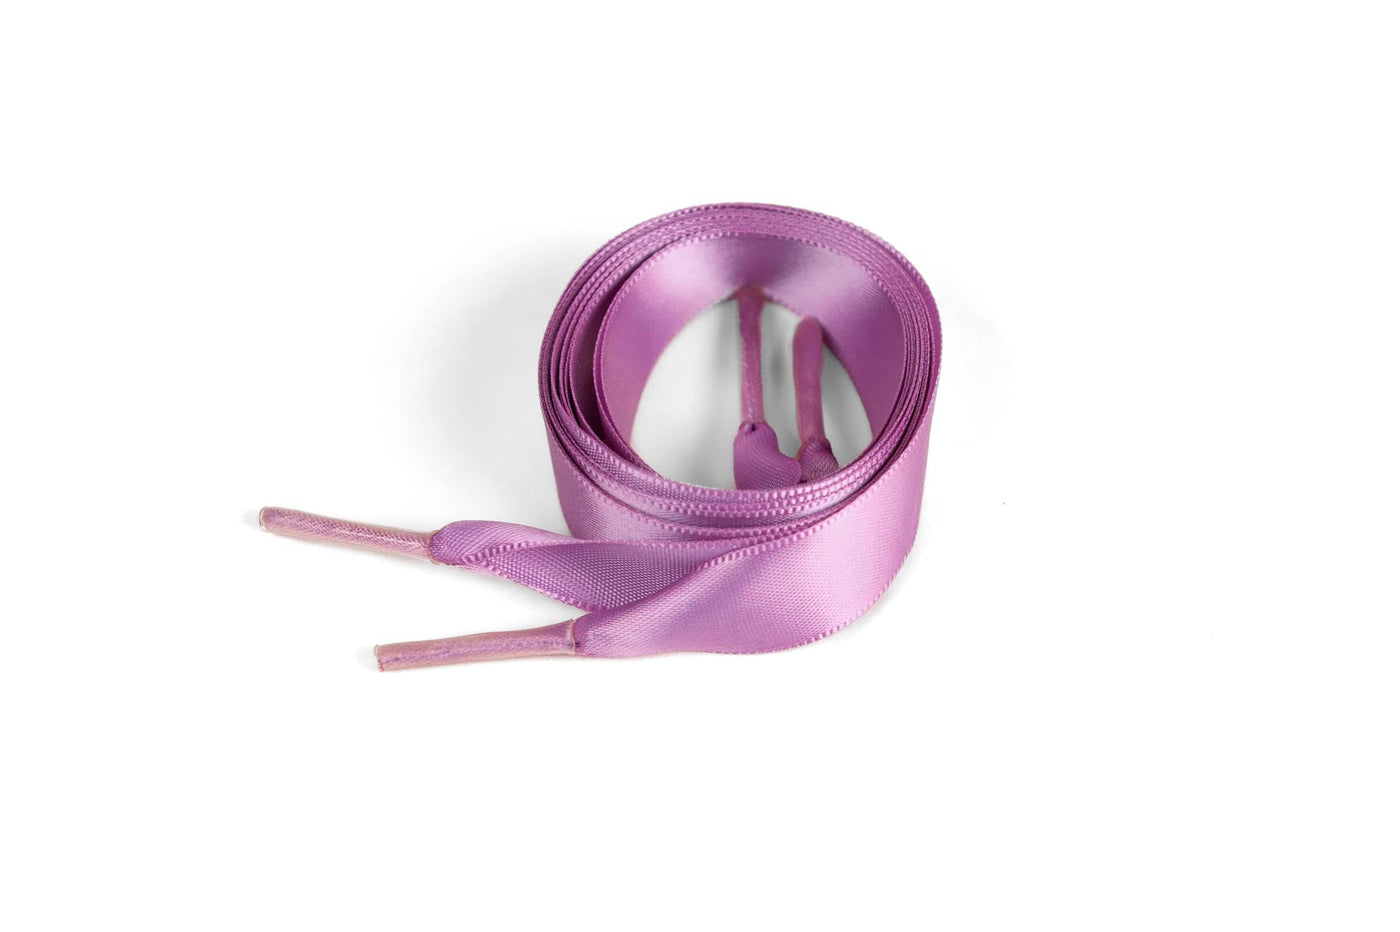 Satin Ribbon 5/8" Premium Quality Shoelaces - 72" Inch Length Rosie Mauve